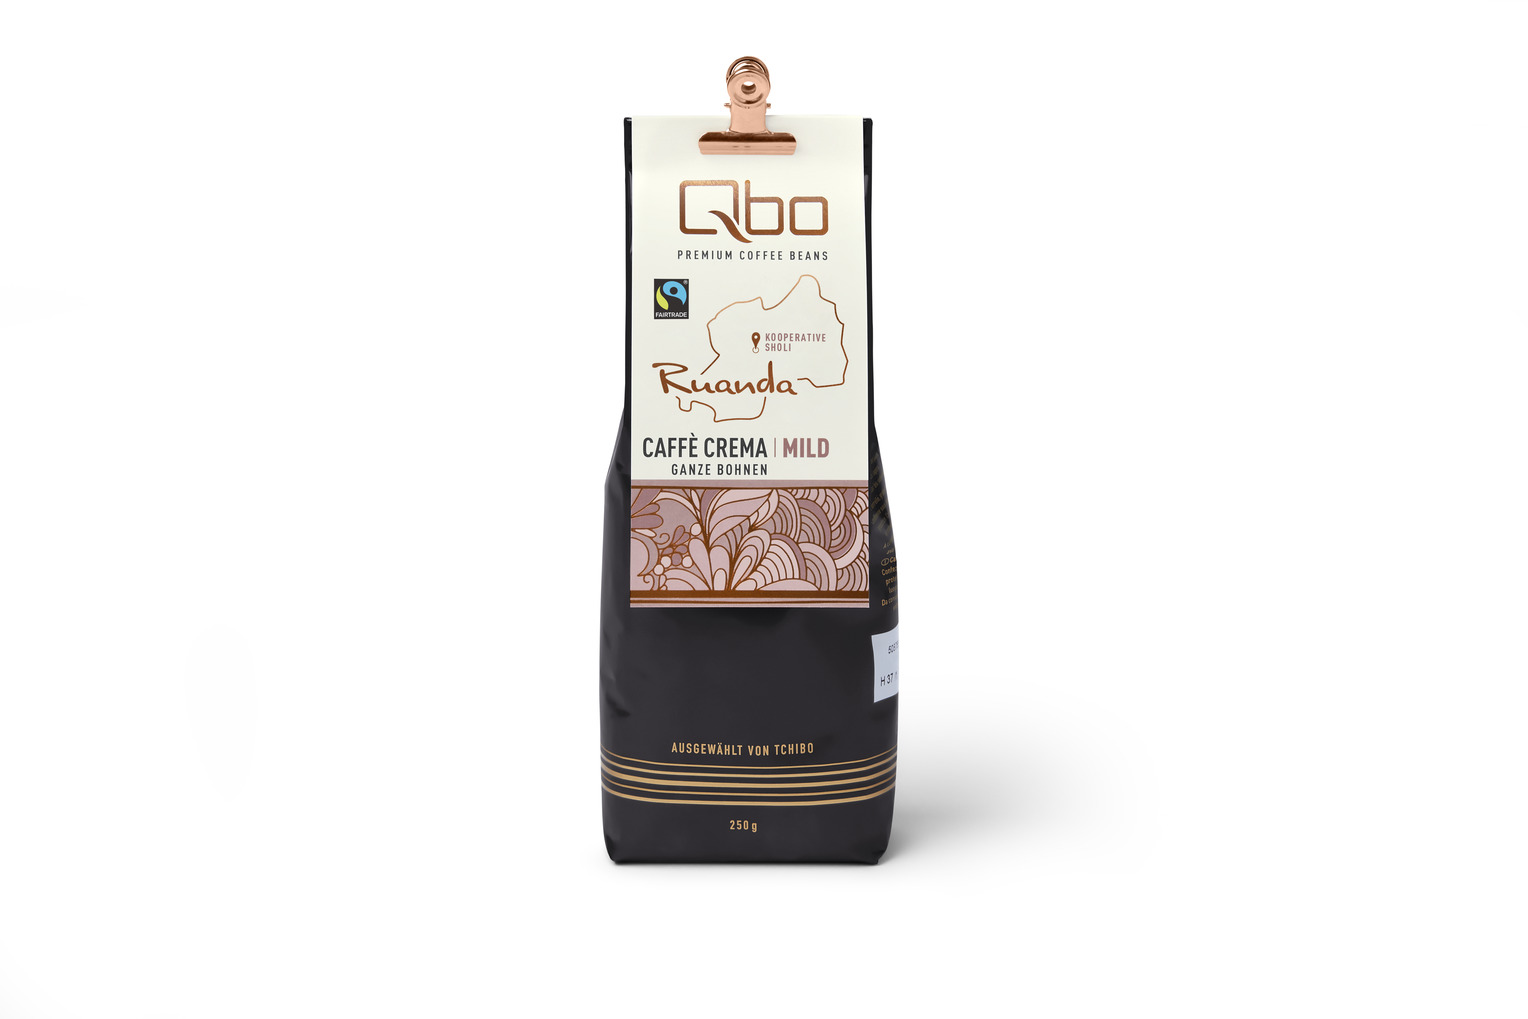 Qbo Ruanda Caffè Crema mild GB